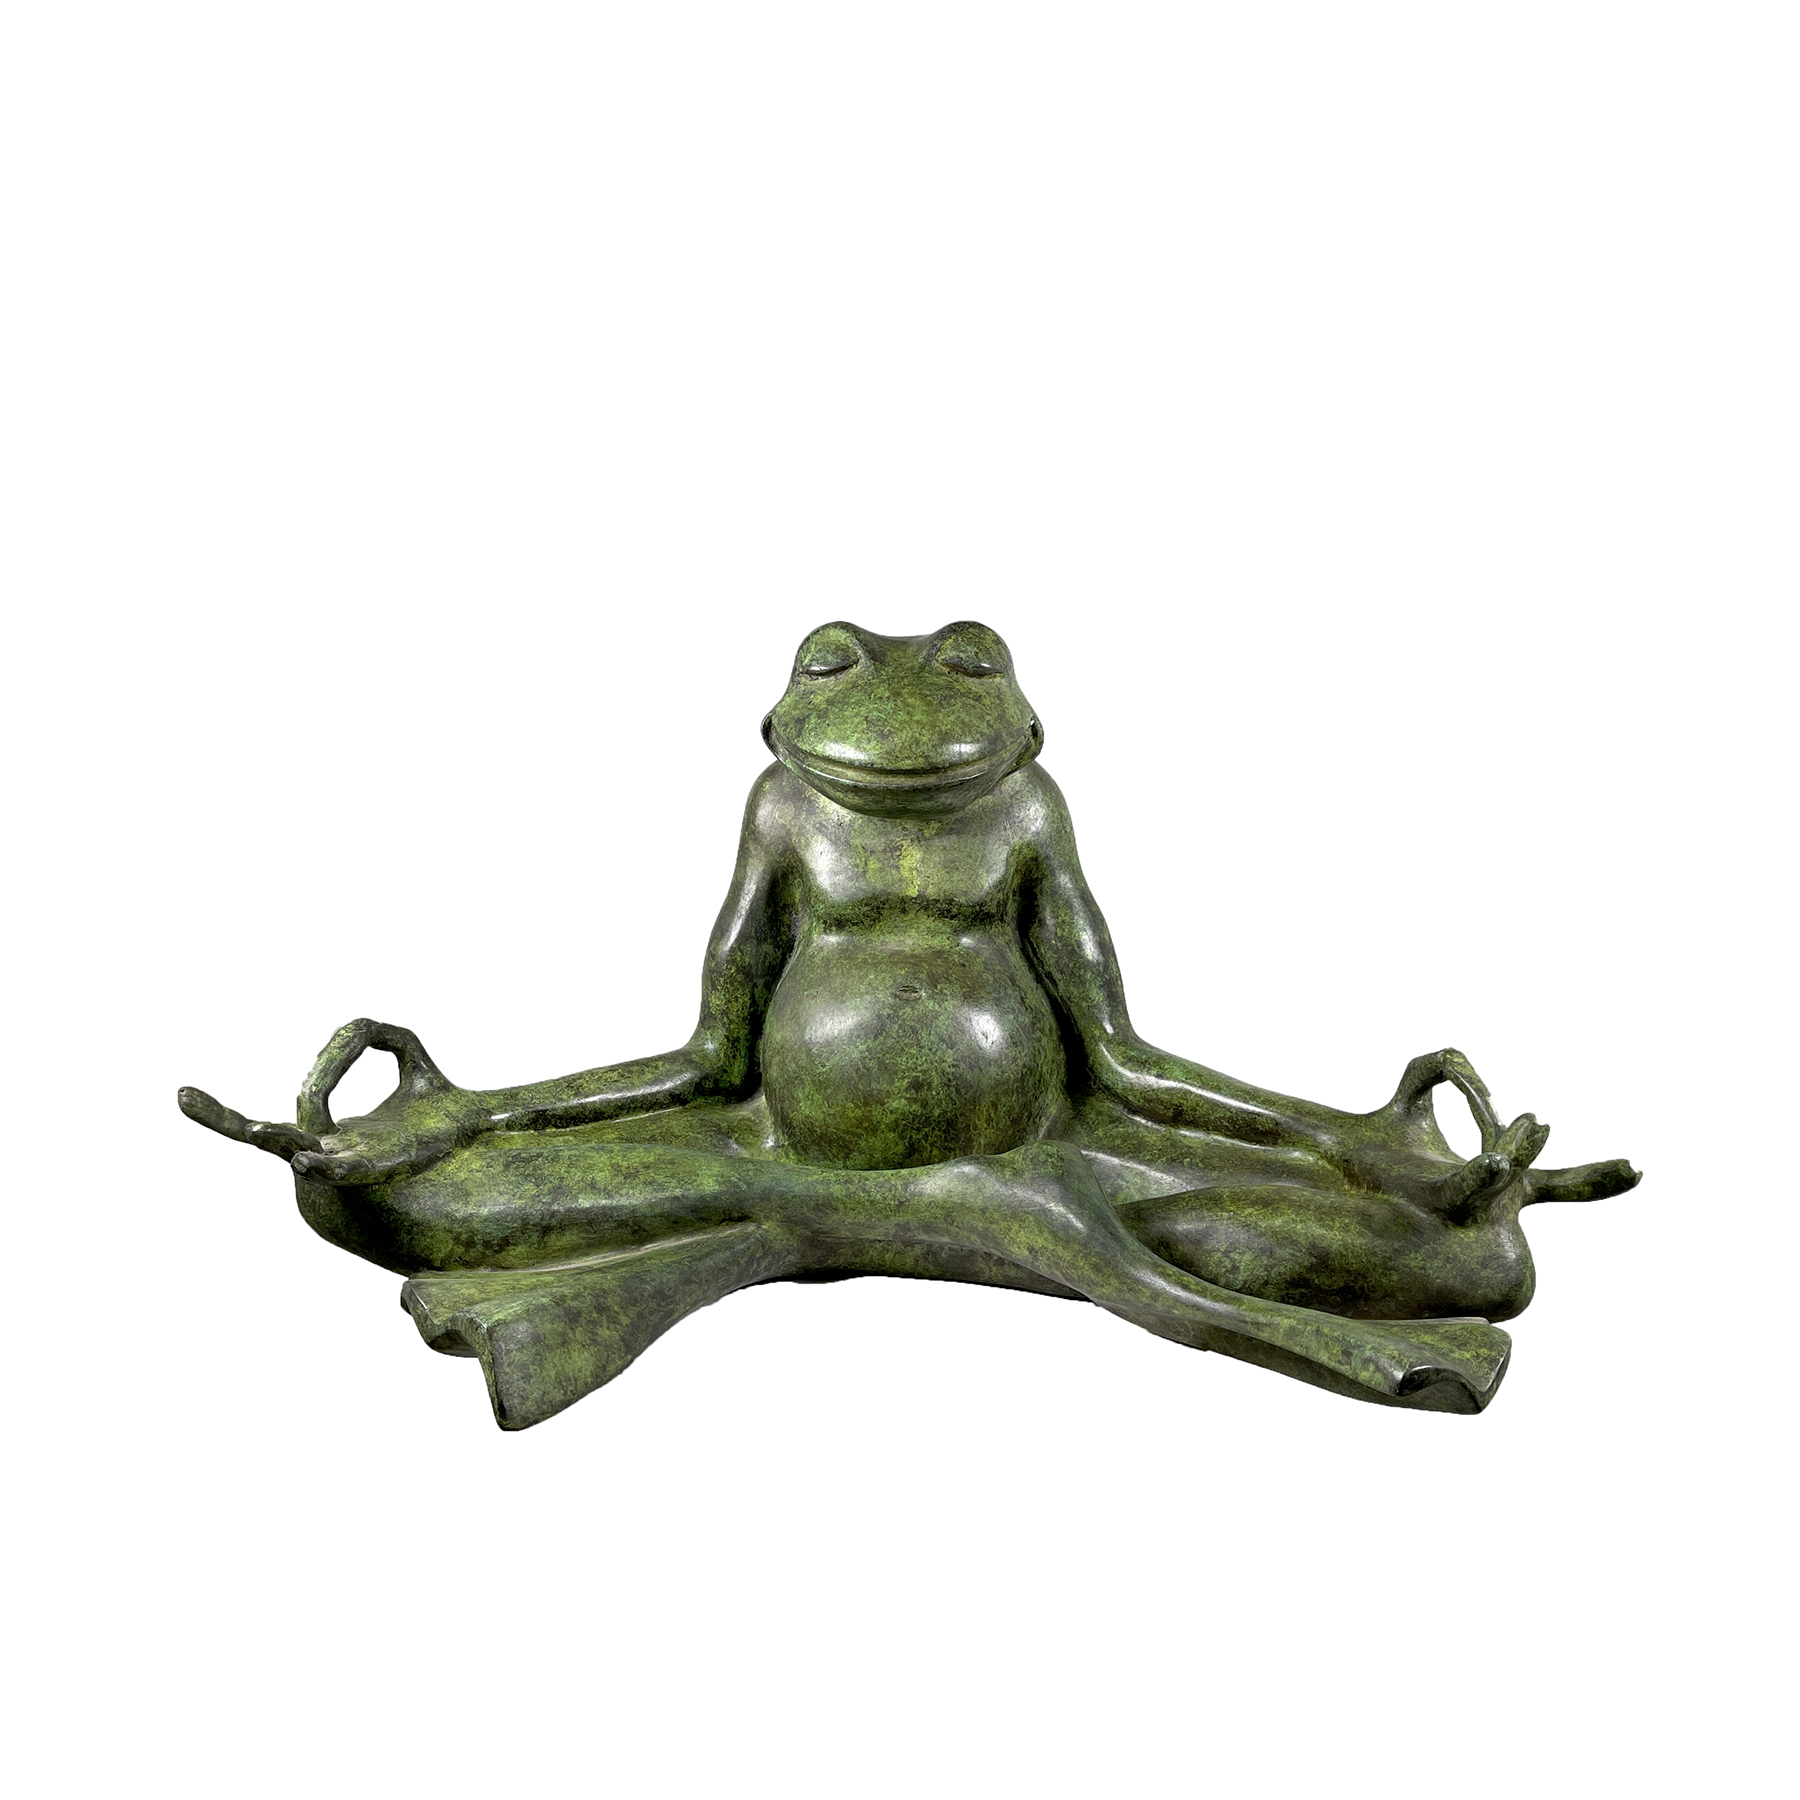 SRB706892-G Bronze Meditating Frog Sculpture in Green Patina by Metropolitan Galleries Inc